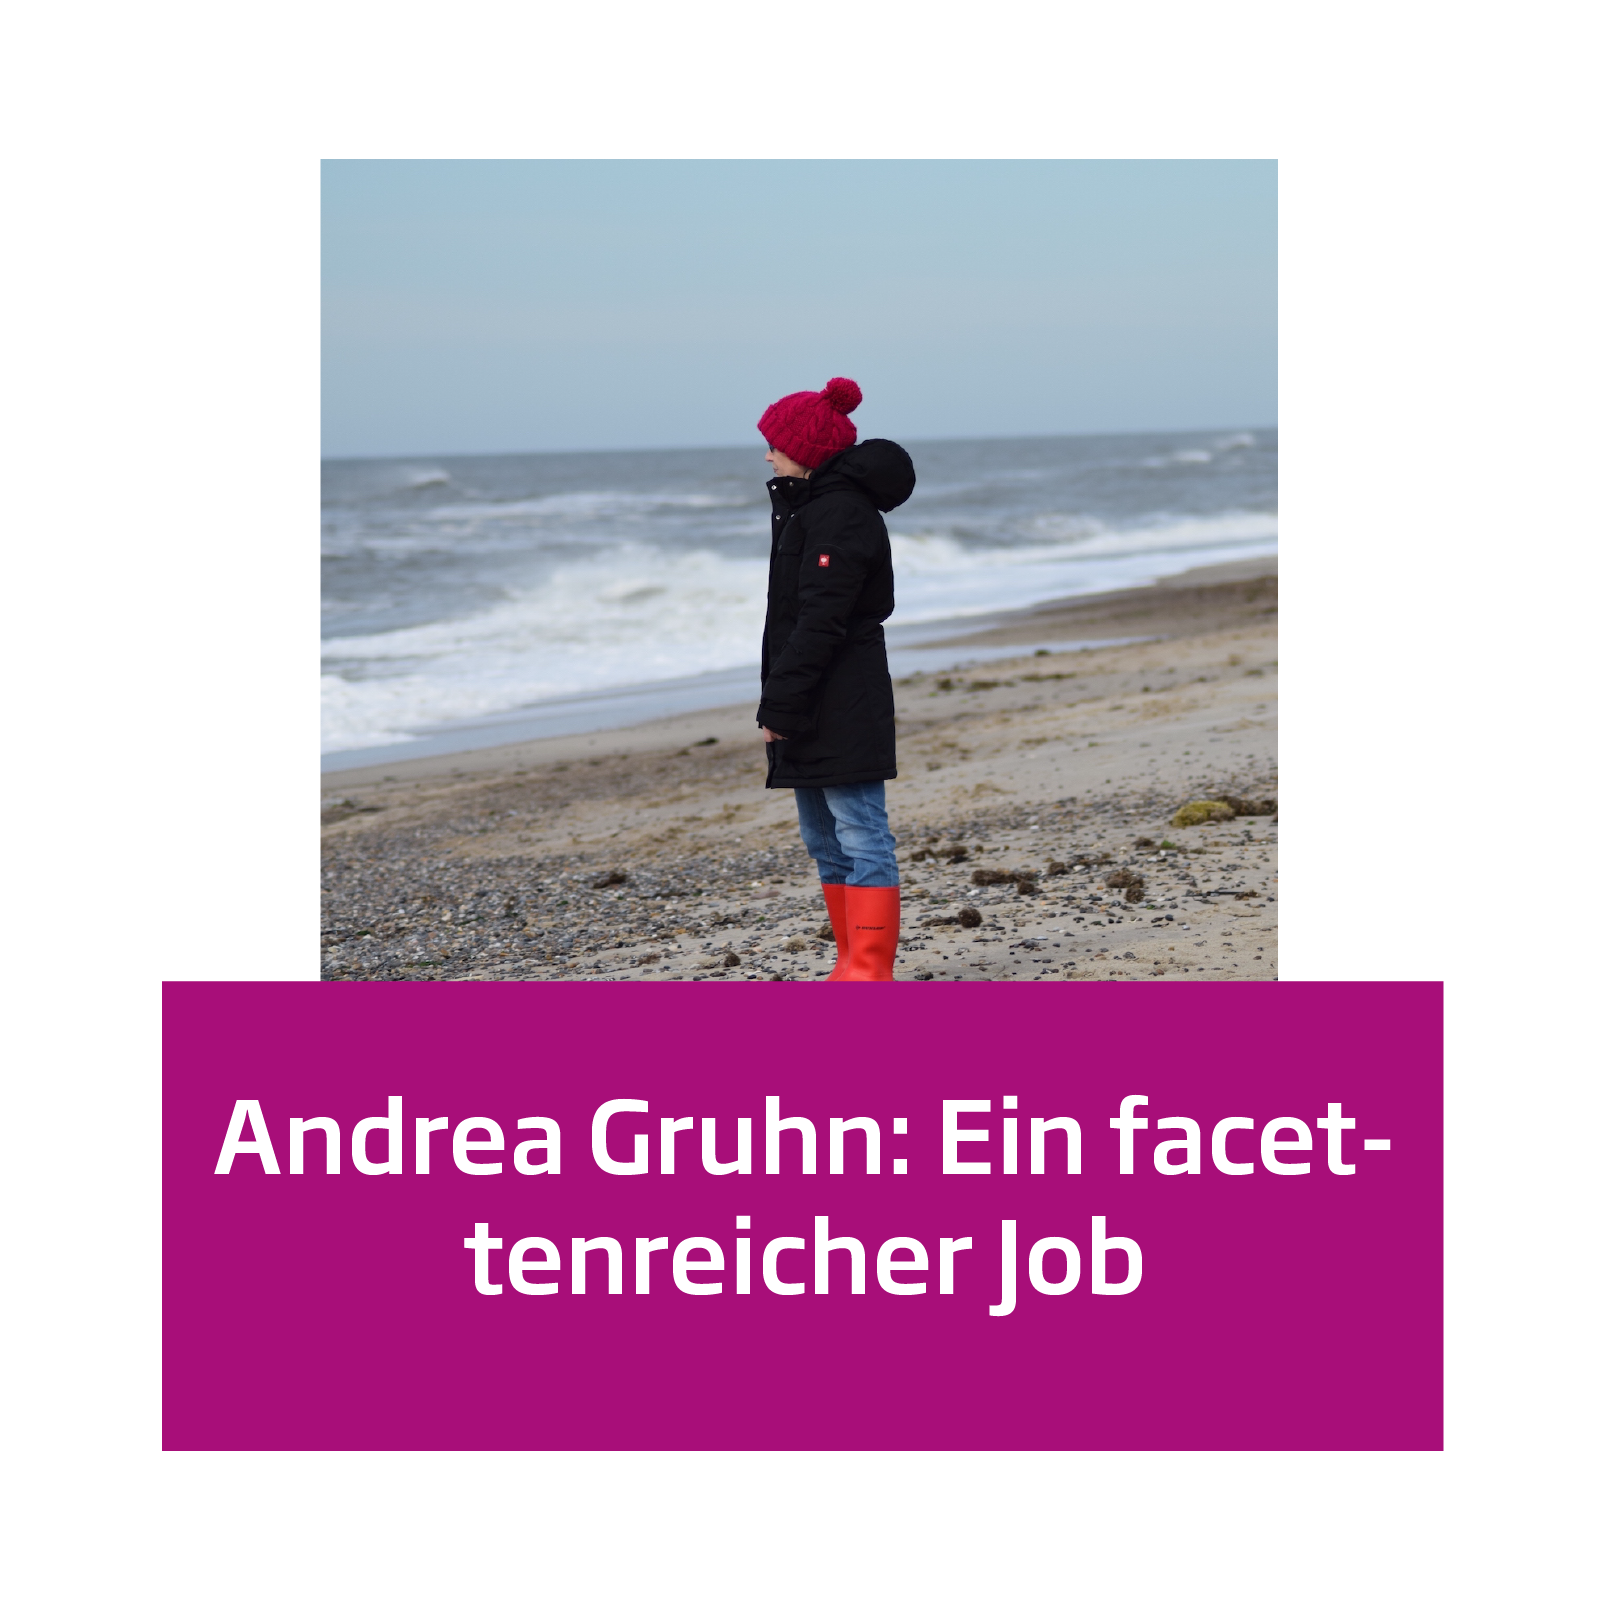 Andrea Gruhn: Ein facettenreicher Job